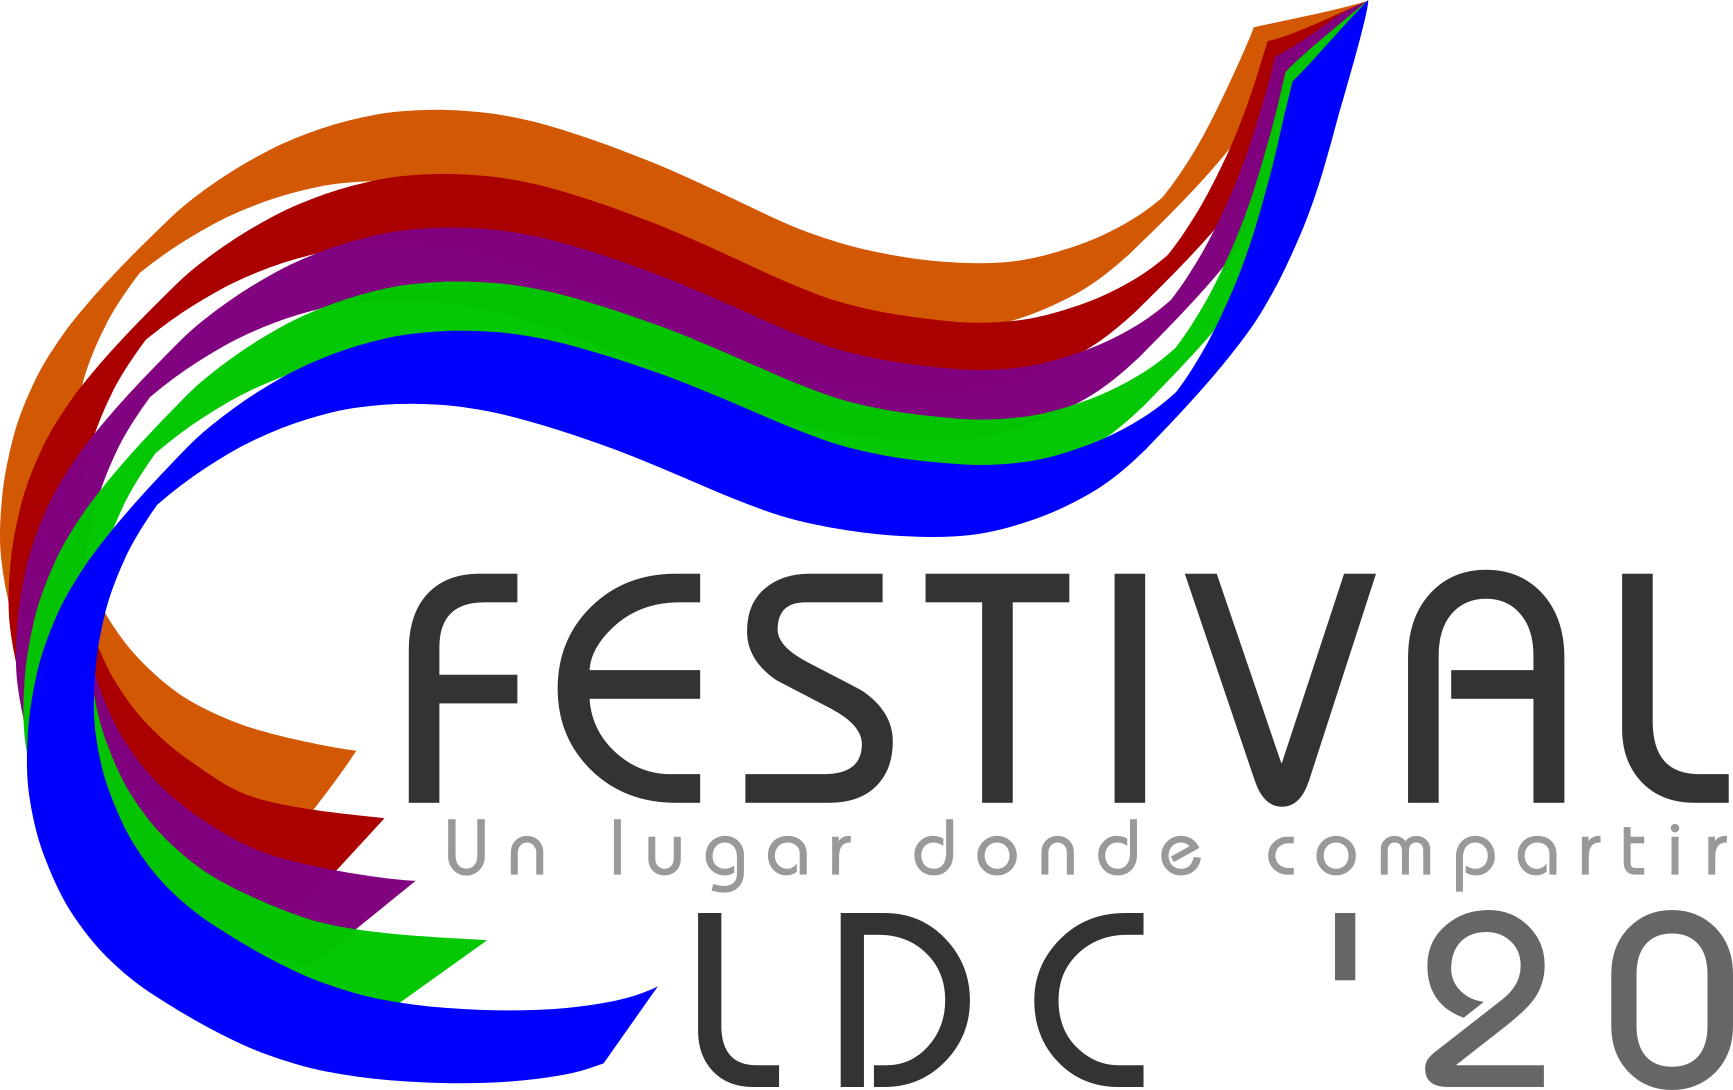 Festival LDC - "Un Lugar donde Compartir"